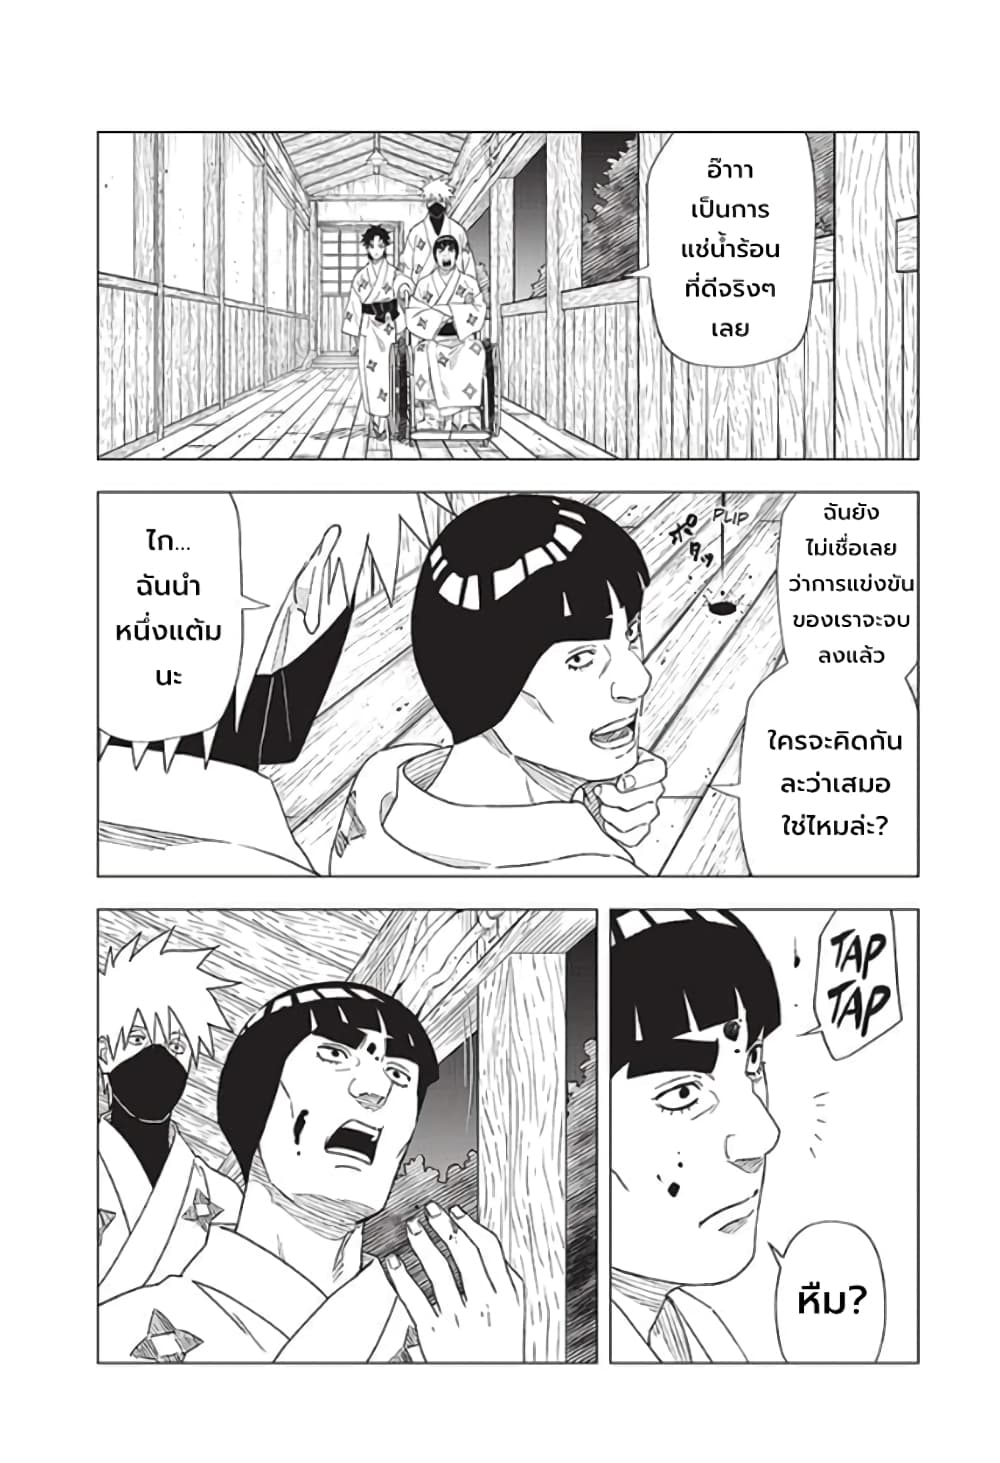 Naruto Konoha’s Story – The Steam Ninja Scrolls The Manga ตอนที่ 8 (11)